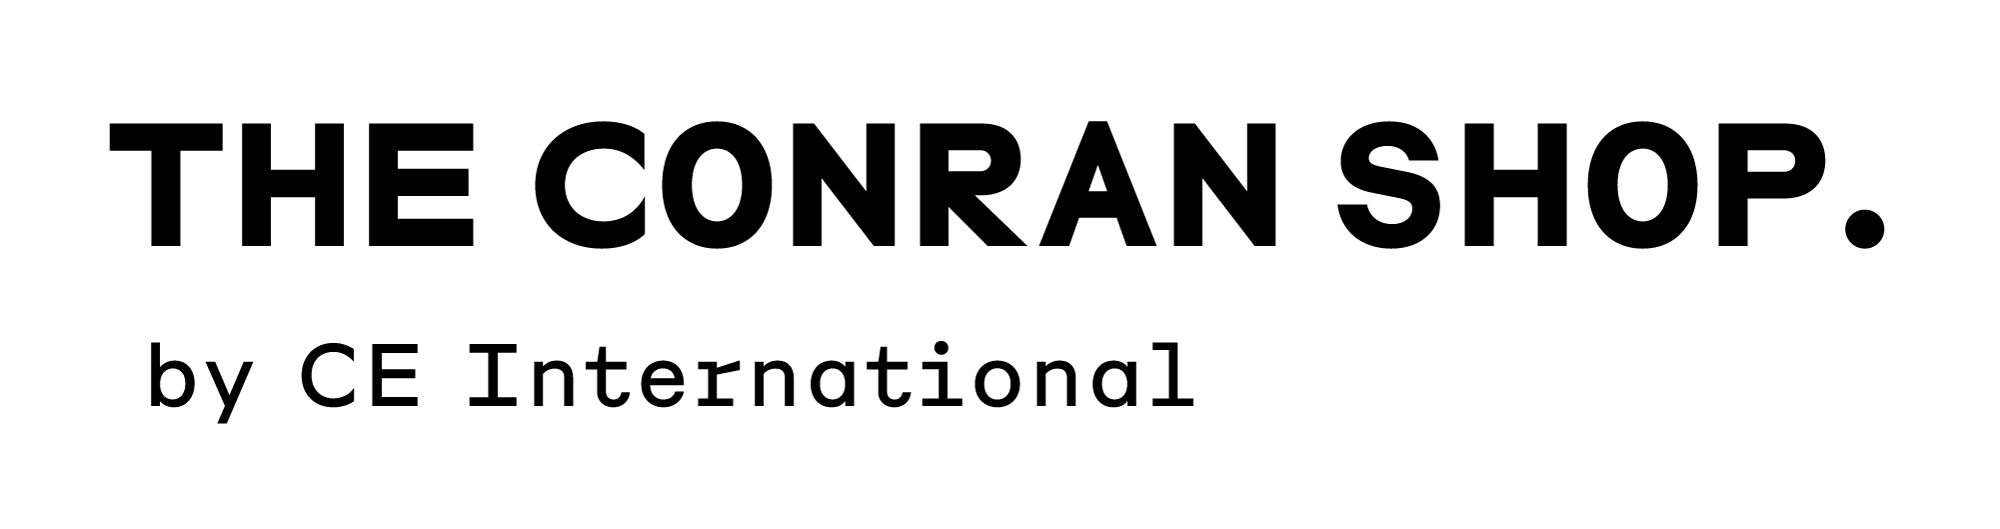 The Conran Shop by CE International